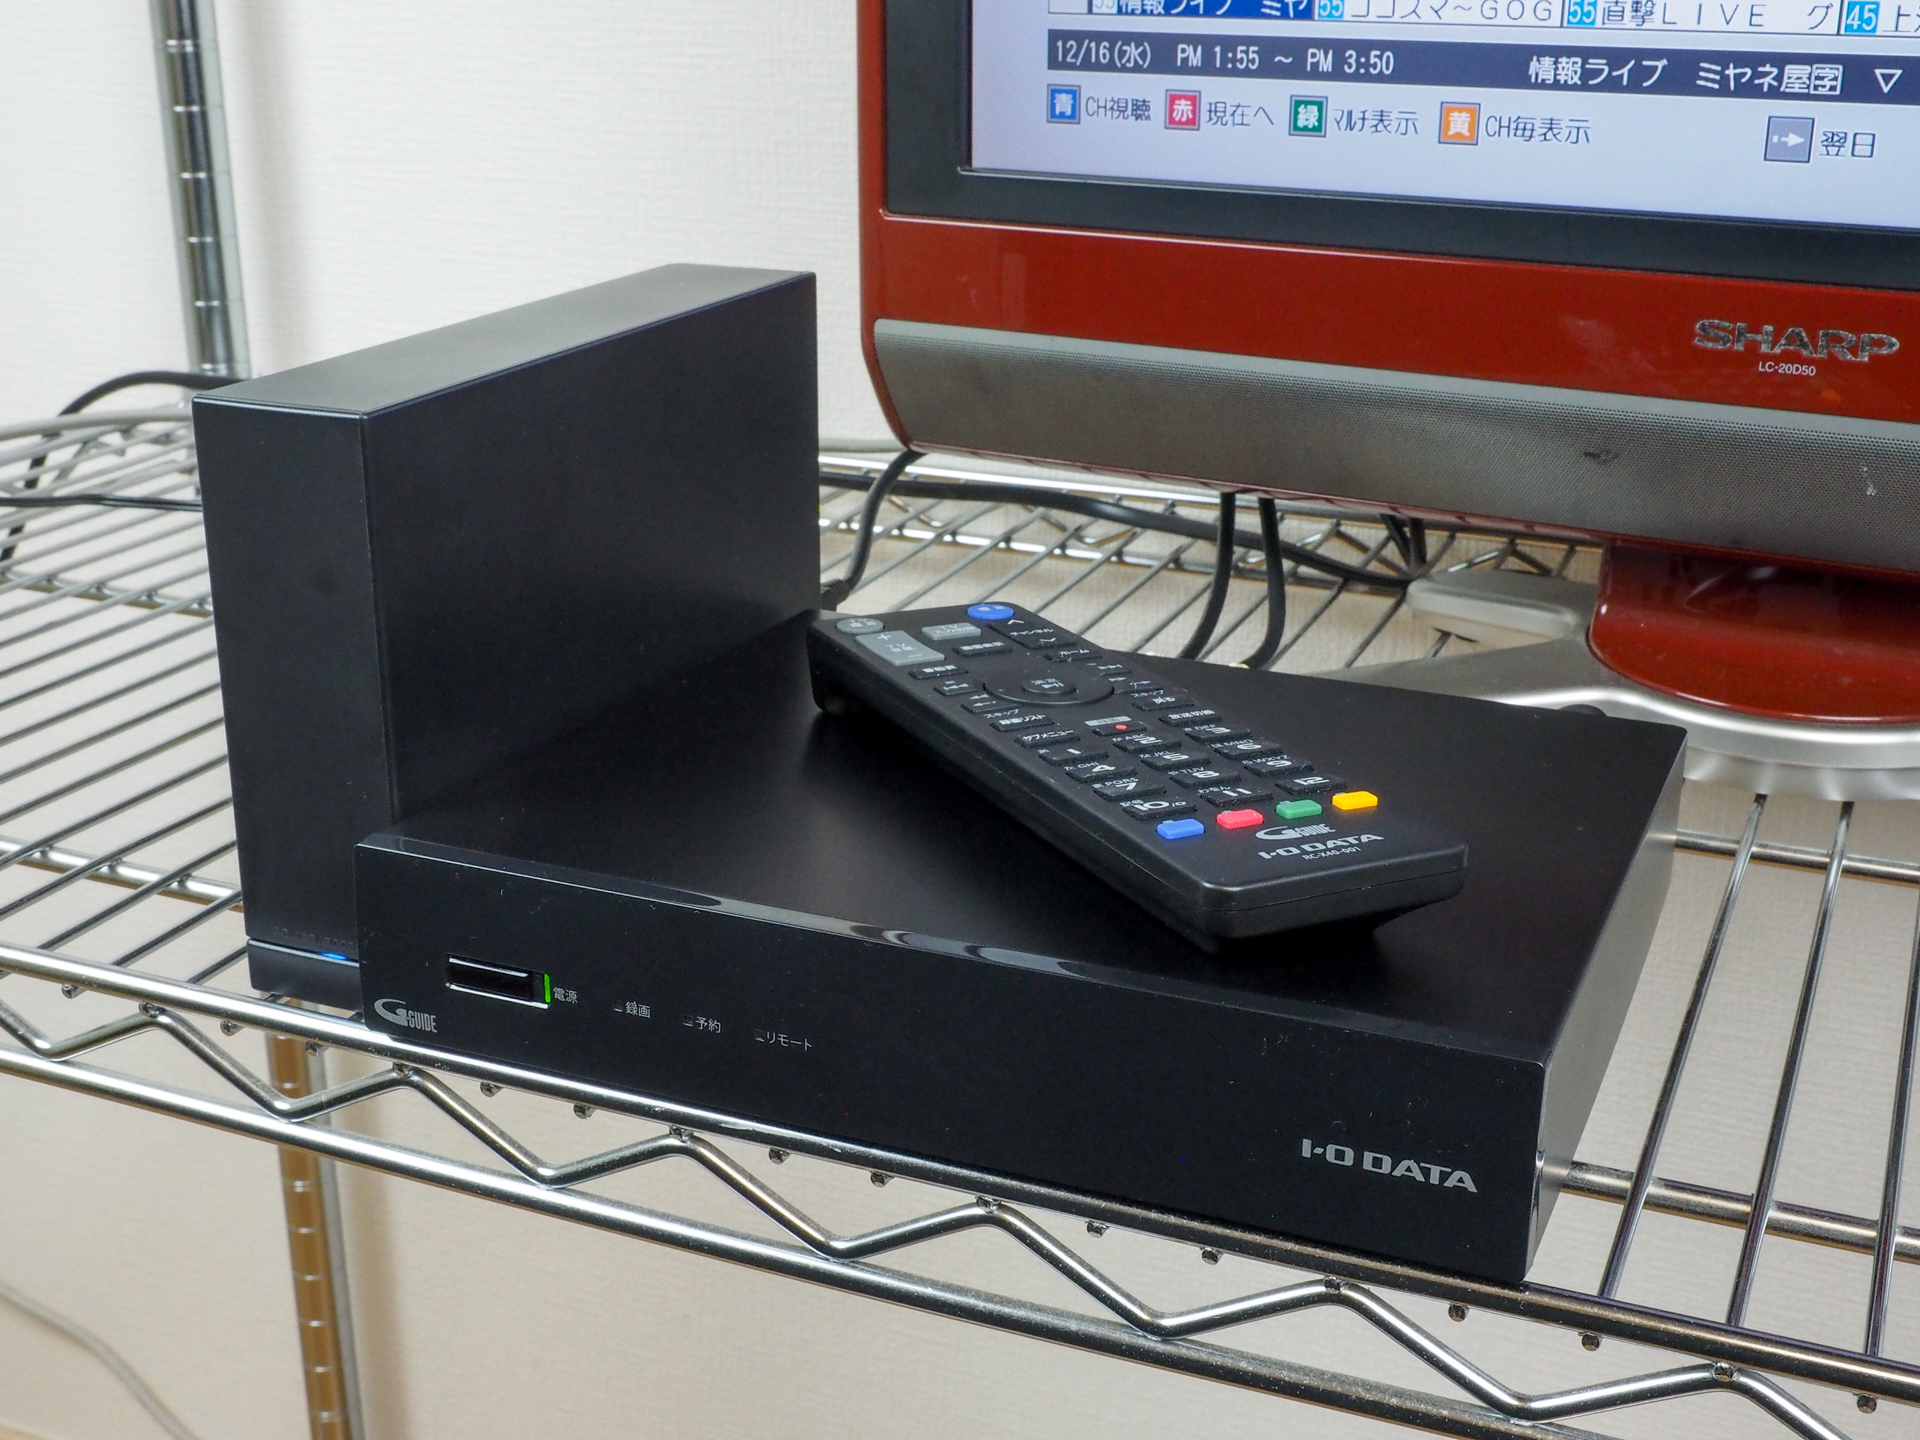 REC-ON HVTR-BCTX3 IODATA ネットワークTVチューナー - テレビ/映像機器